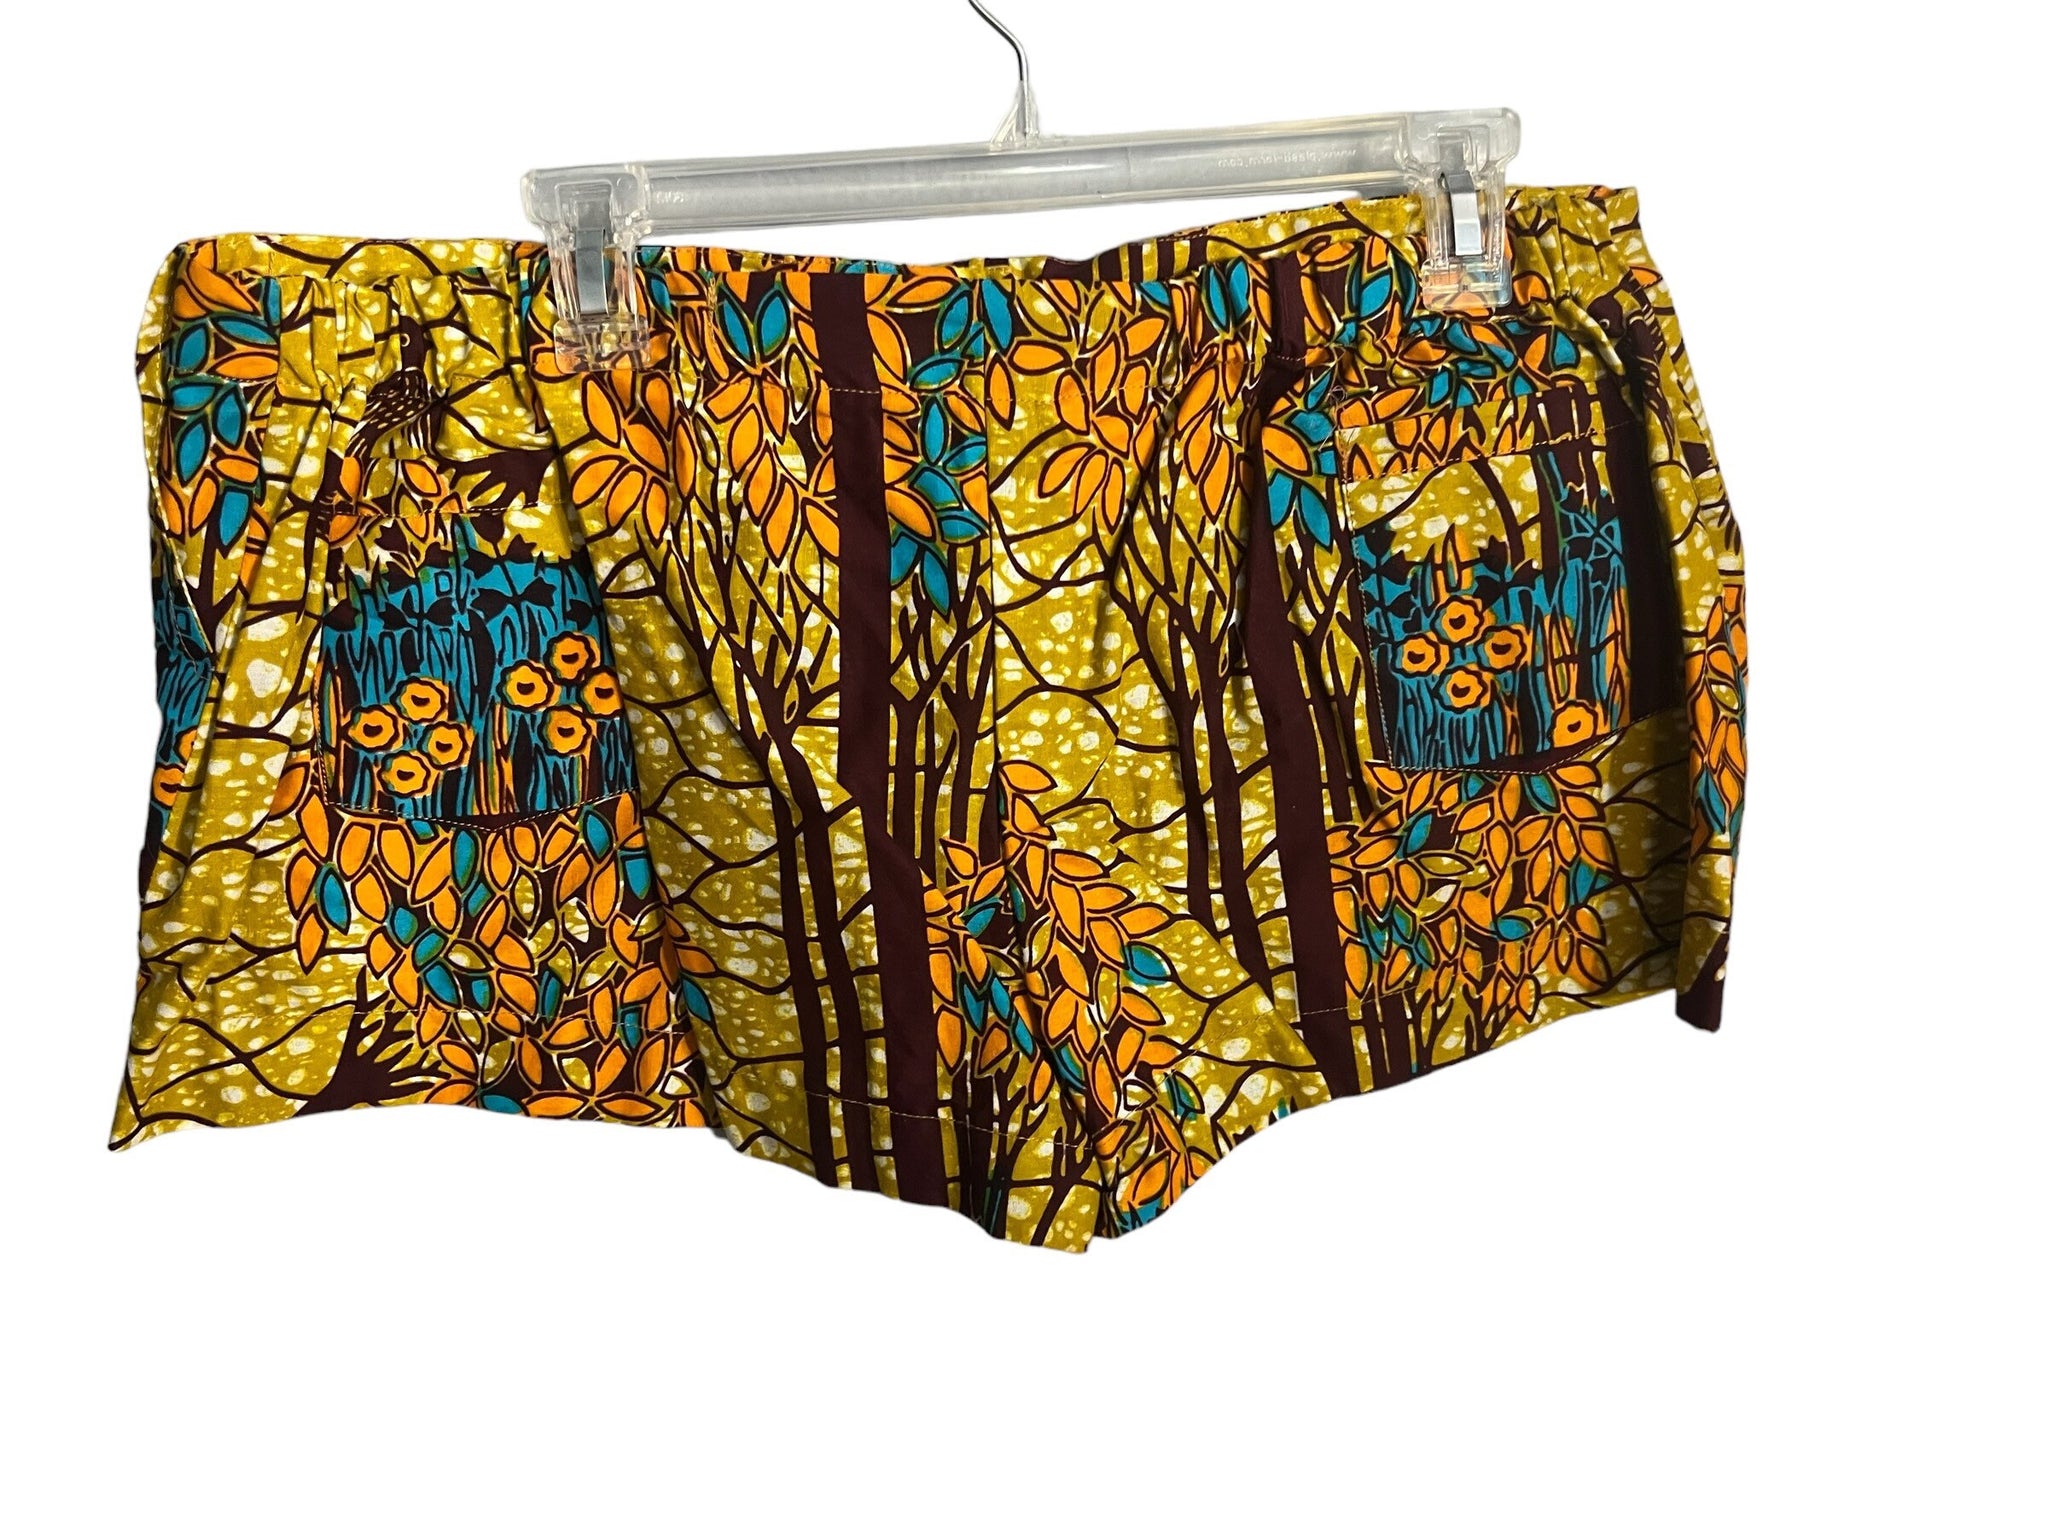 Vintage African print swim shorts L XL